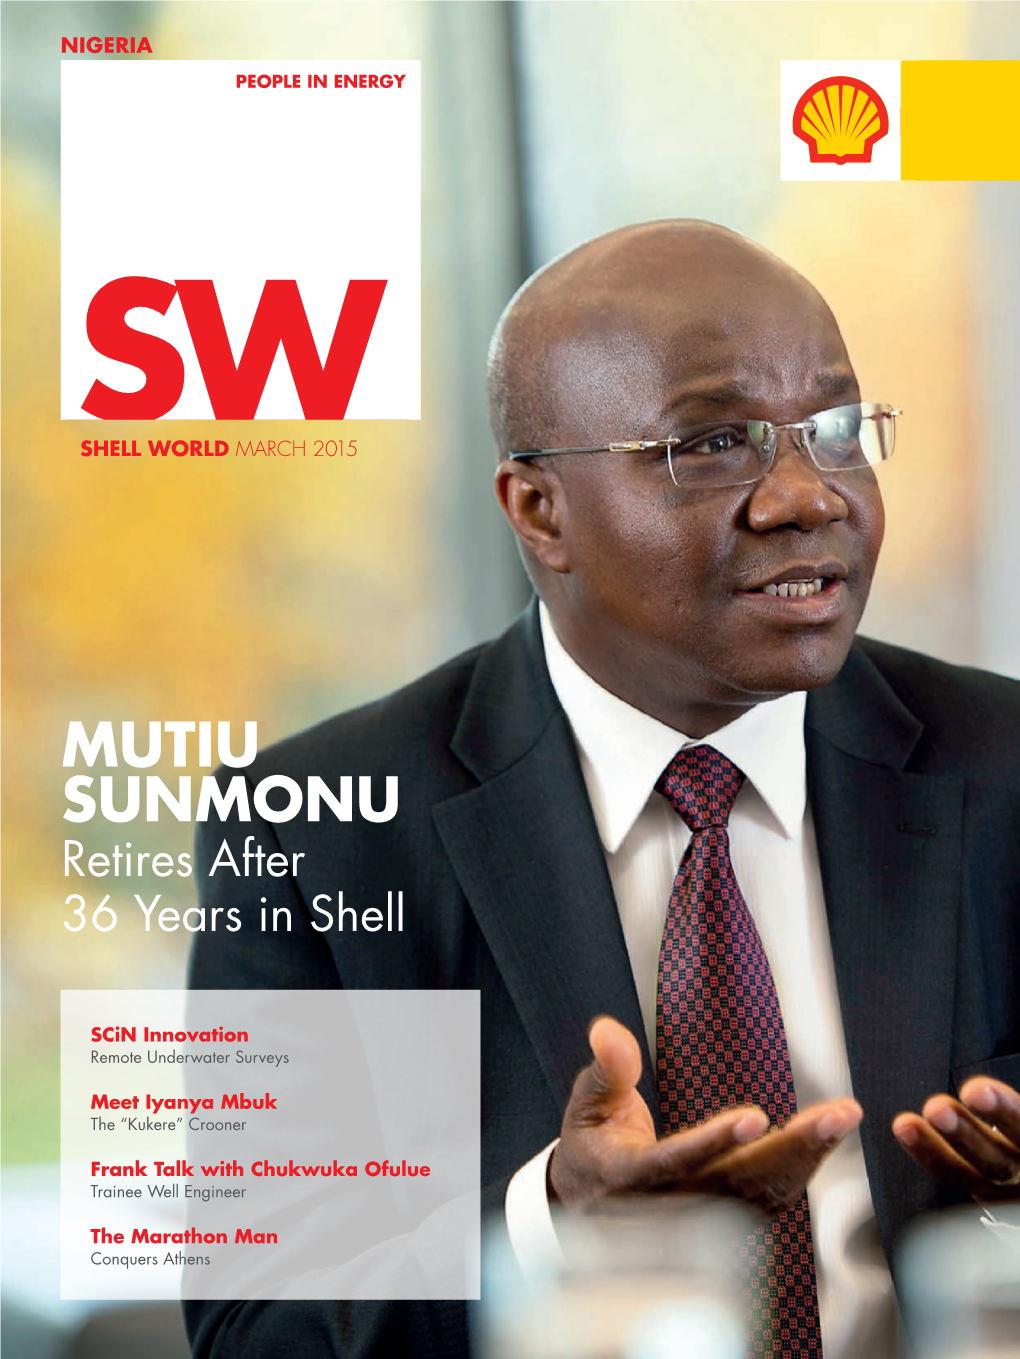 MUTIU SUNMONU Retires After 36 Years in Shell